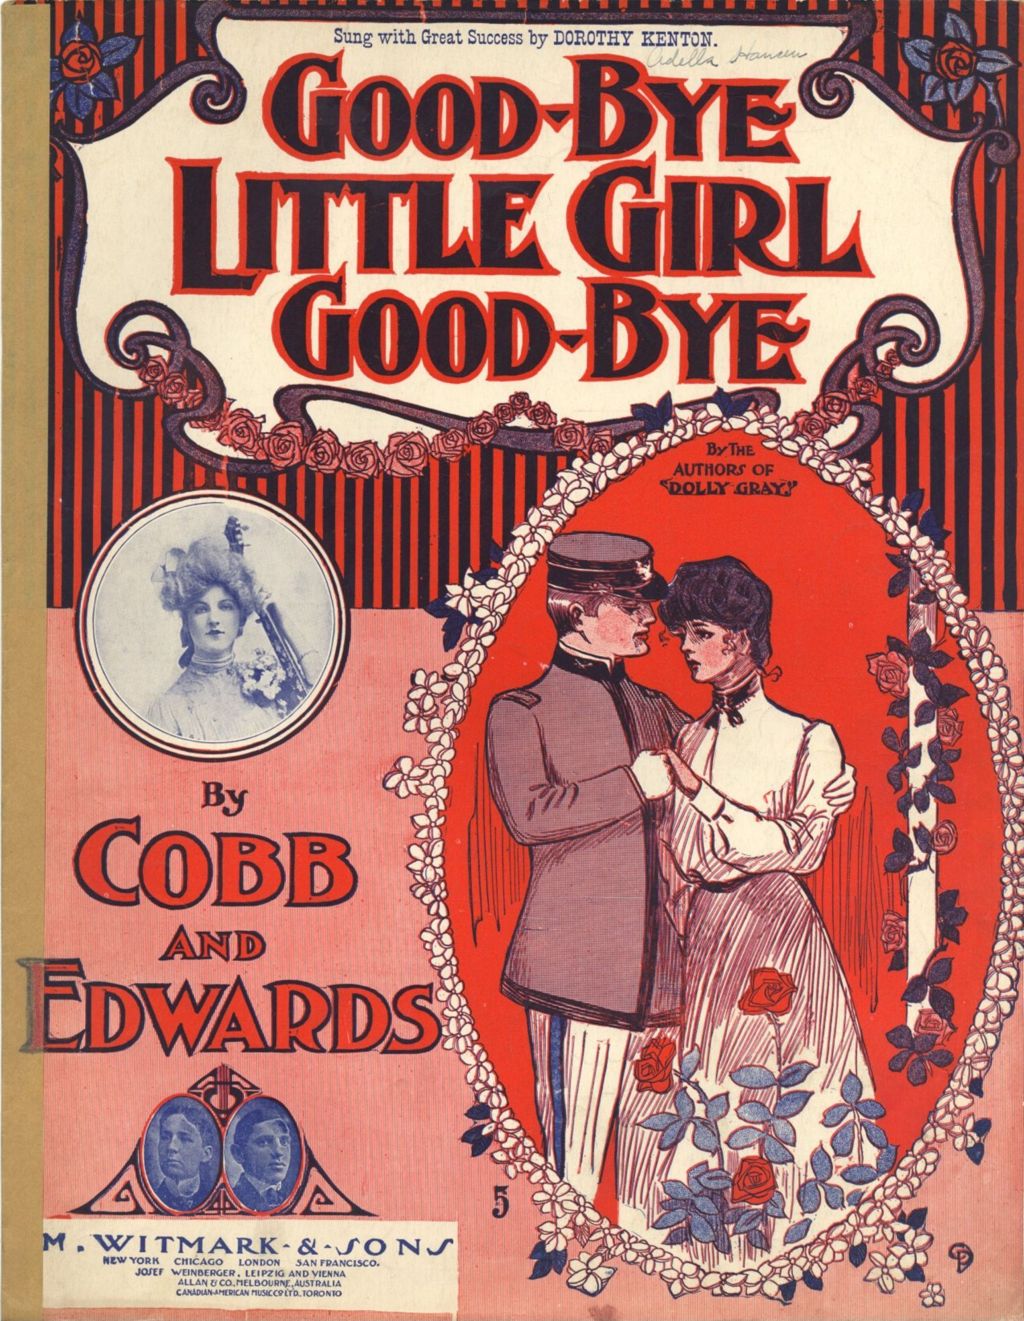 Miniature of Good-Bye Little Girl Good-Bye